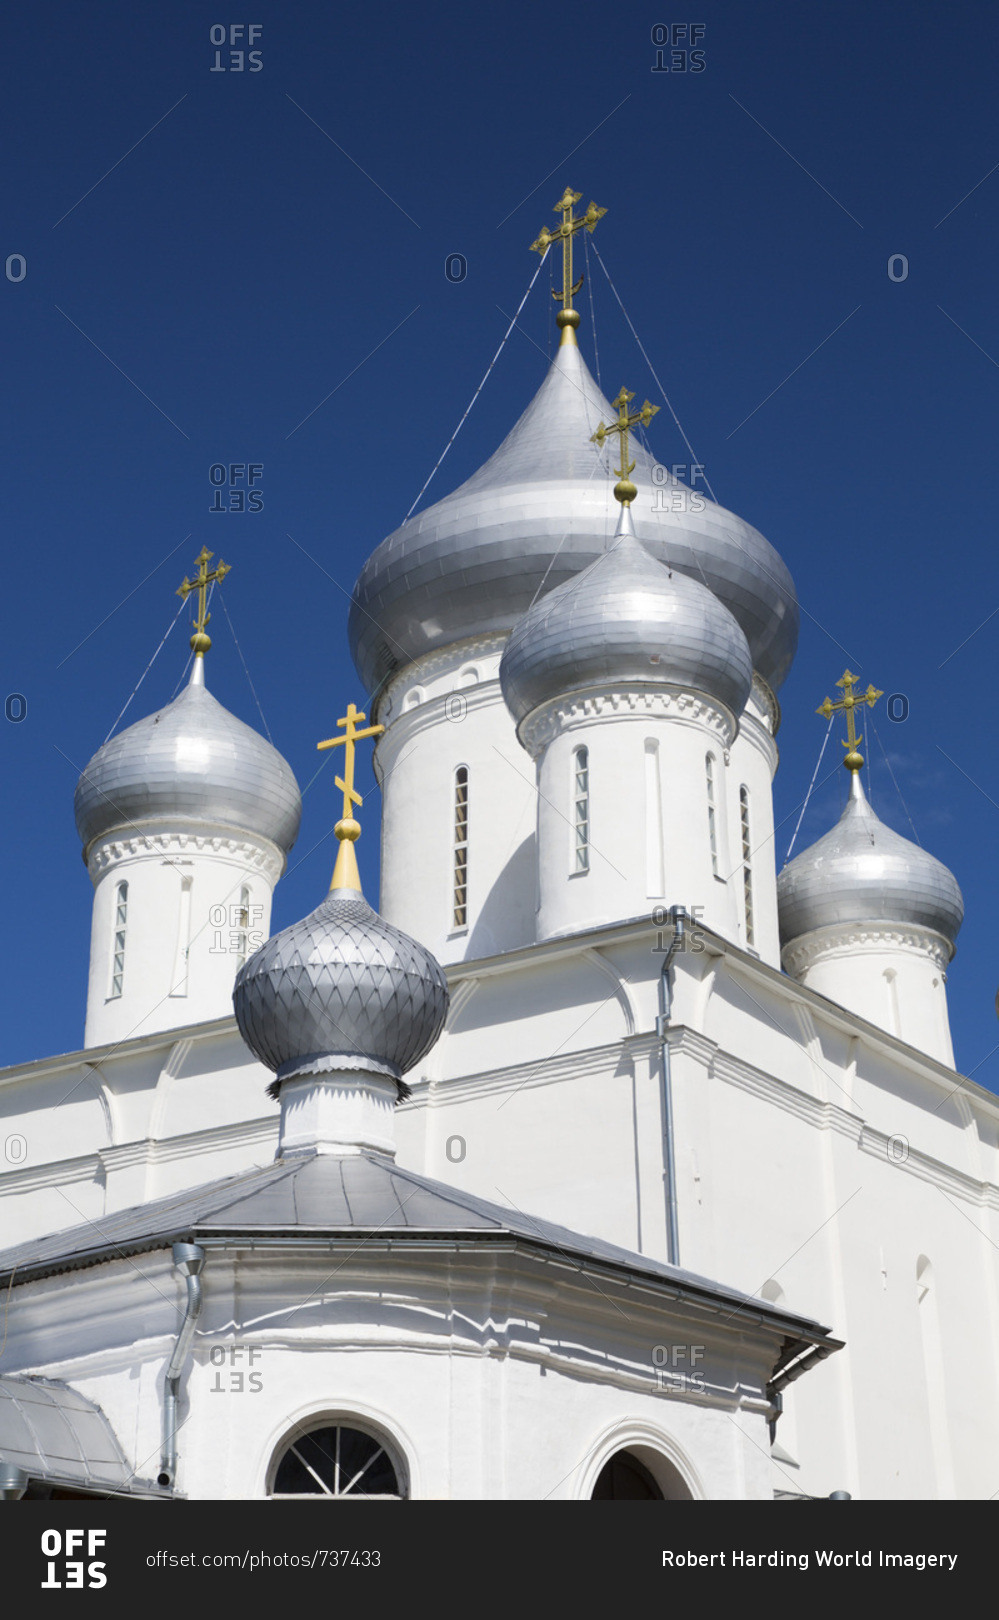 Nikitsky Cathedral, Nikitsky Monastery, Pereslavl-Zalessky, Golden Ring, Yaroslavl Oblast, Russia, Europe